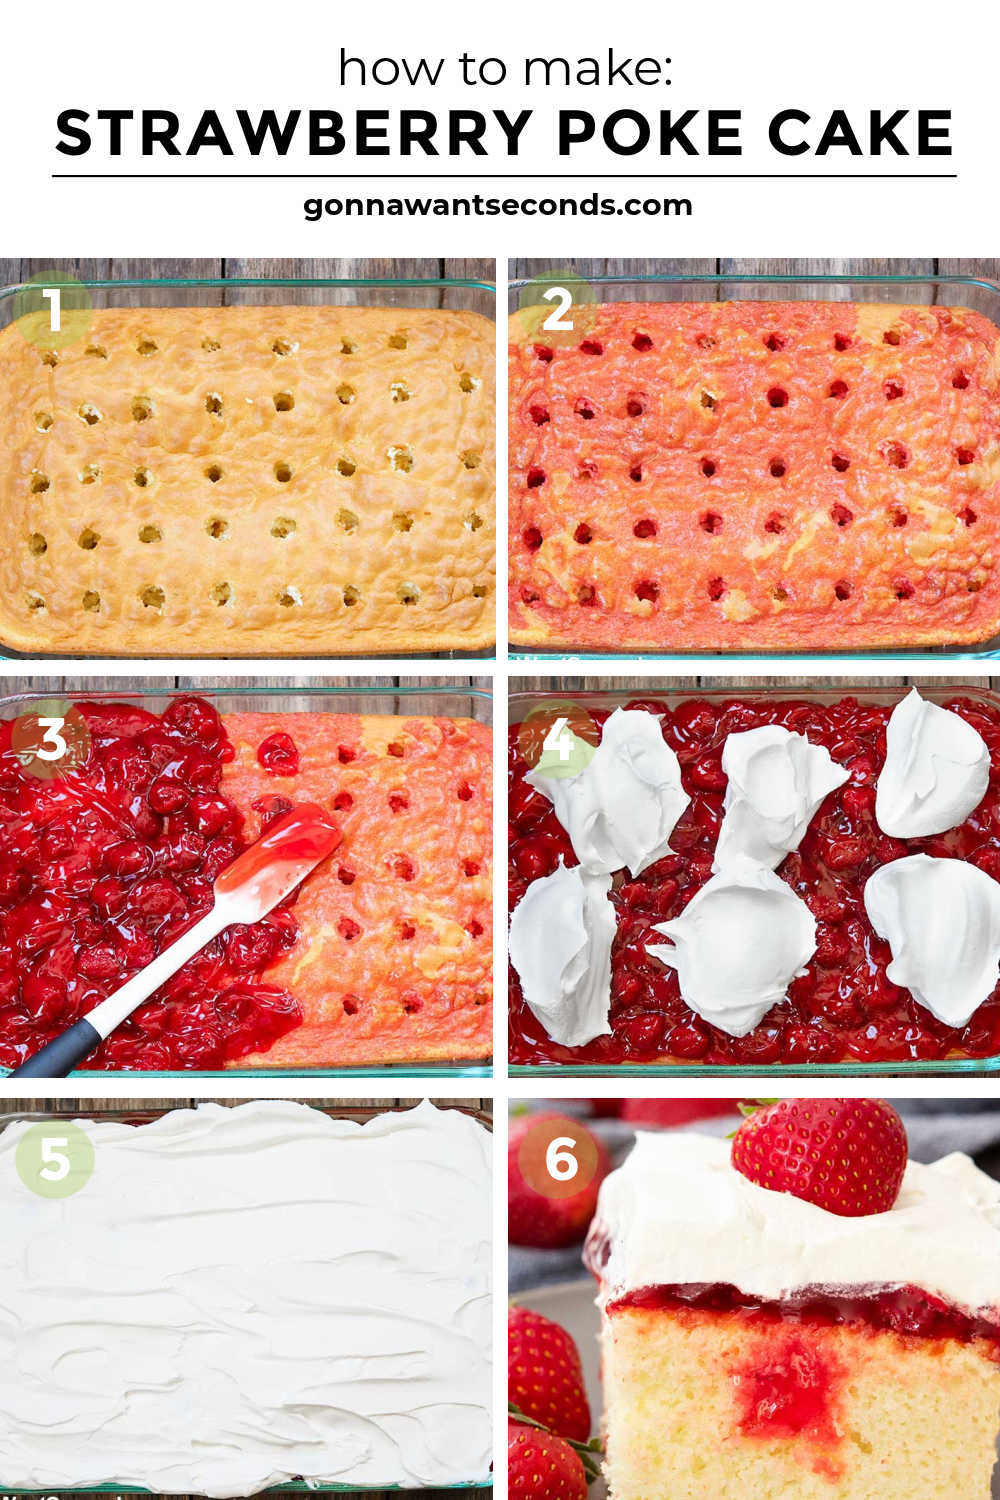 Step by step how to make strawberry poke cake